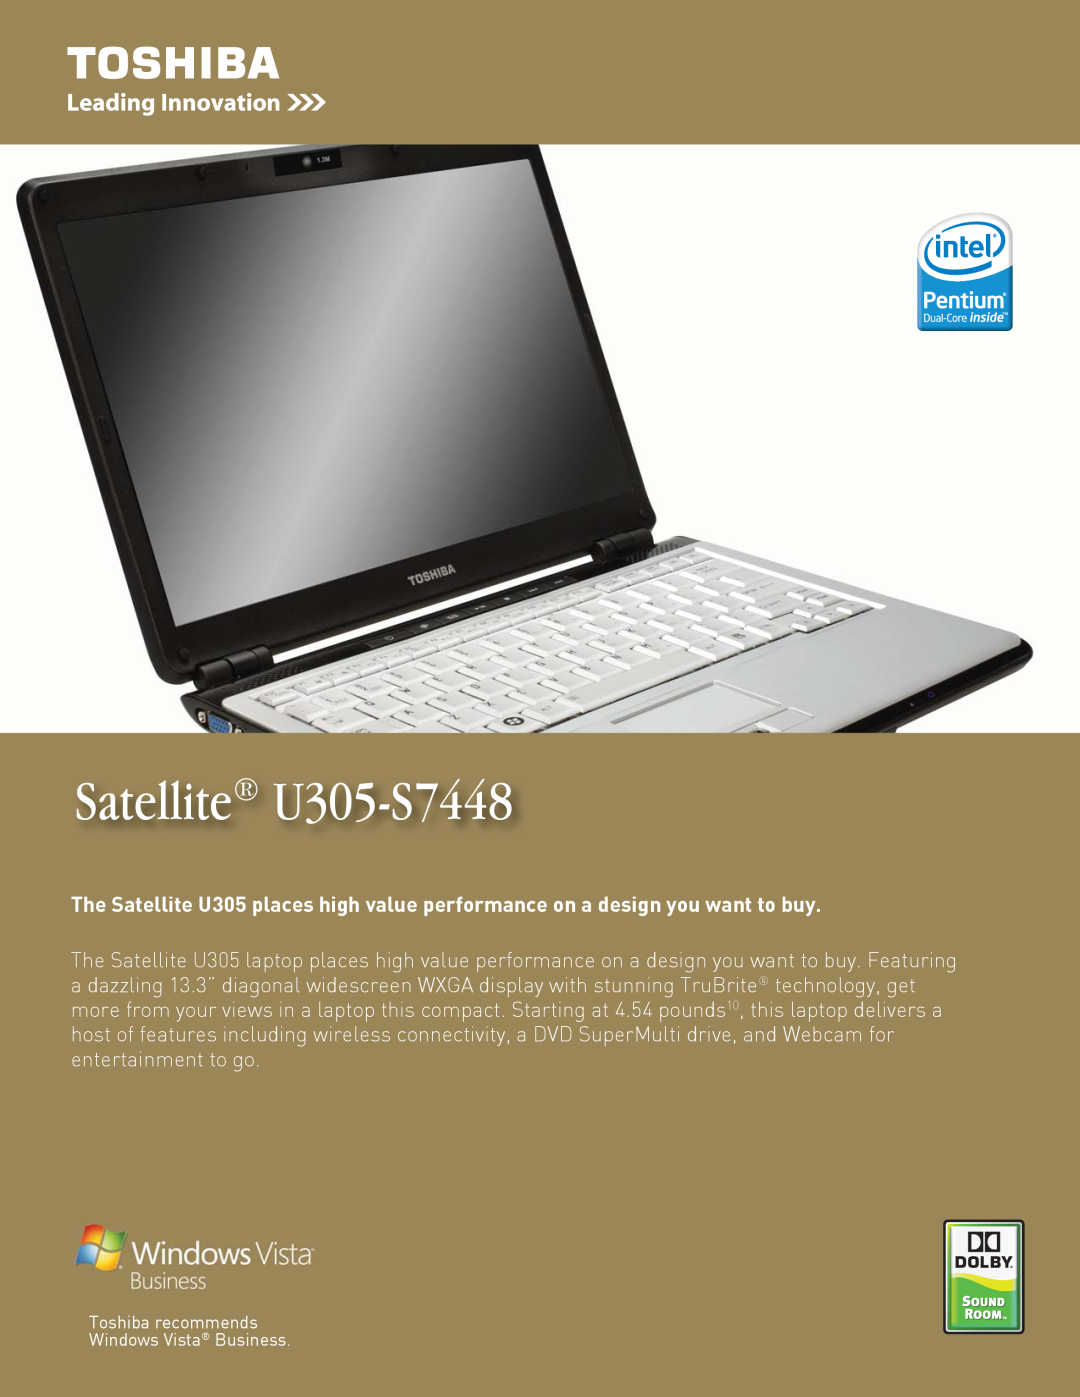 Toshiba manual Satellite U305-S7448, Toshiba recommends Windows Vista Business 